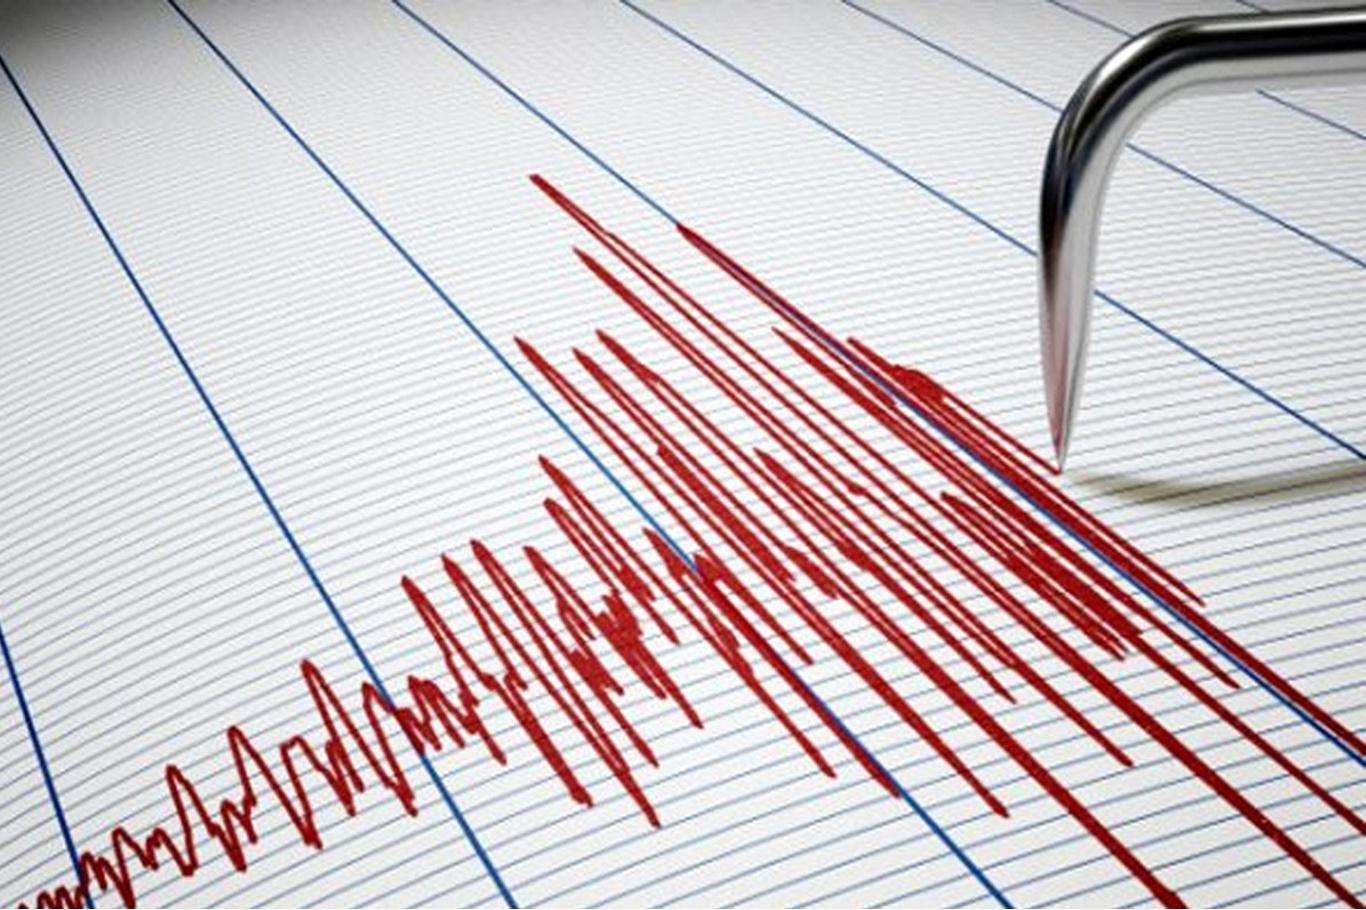 A 3.5 magnitude earthquake jolts western Turkey